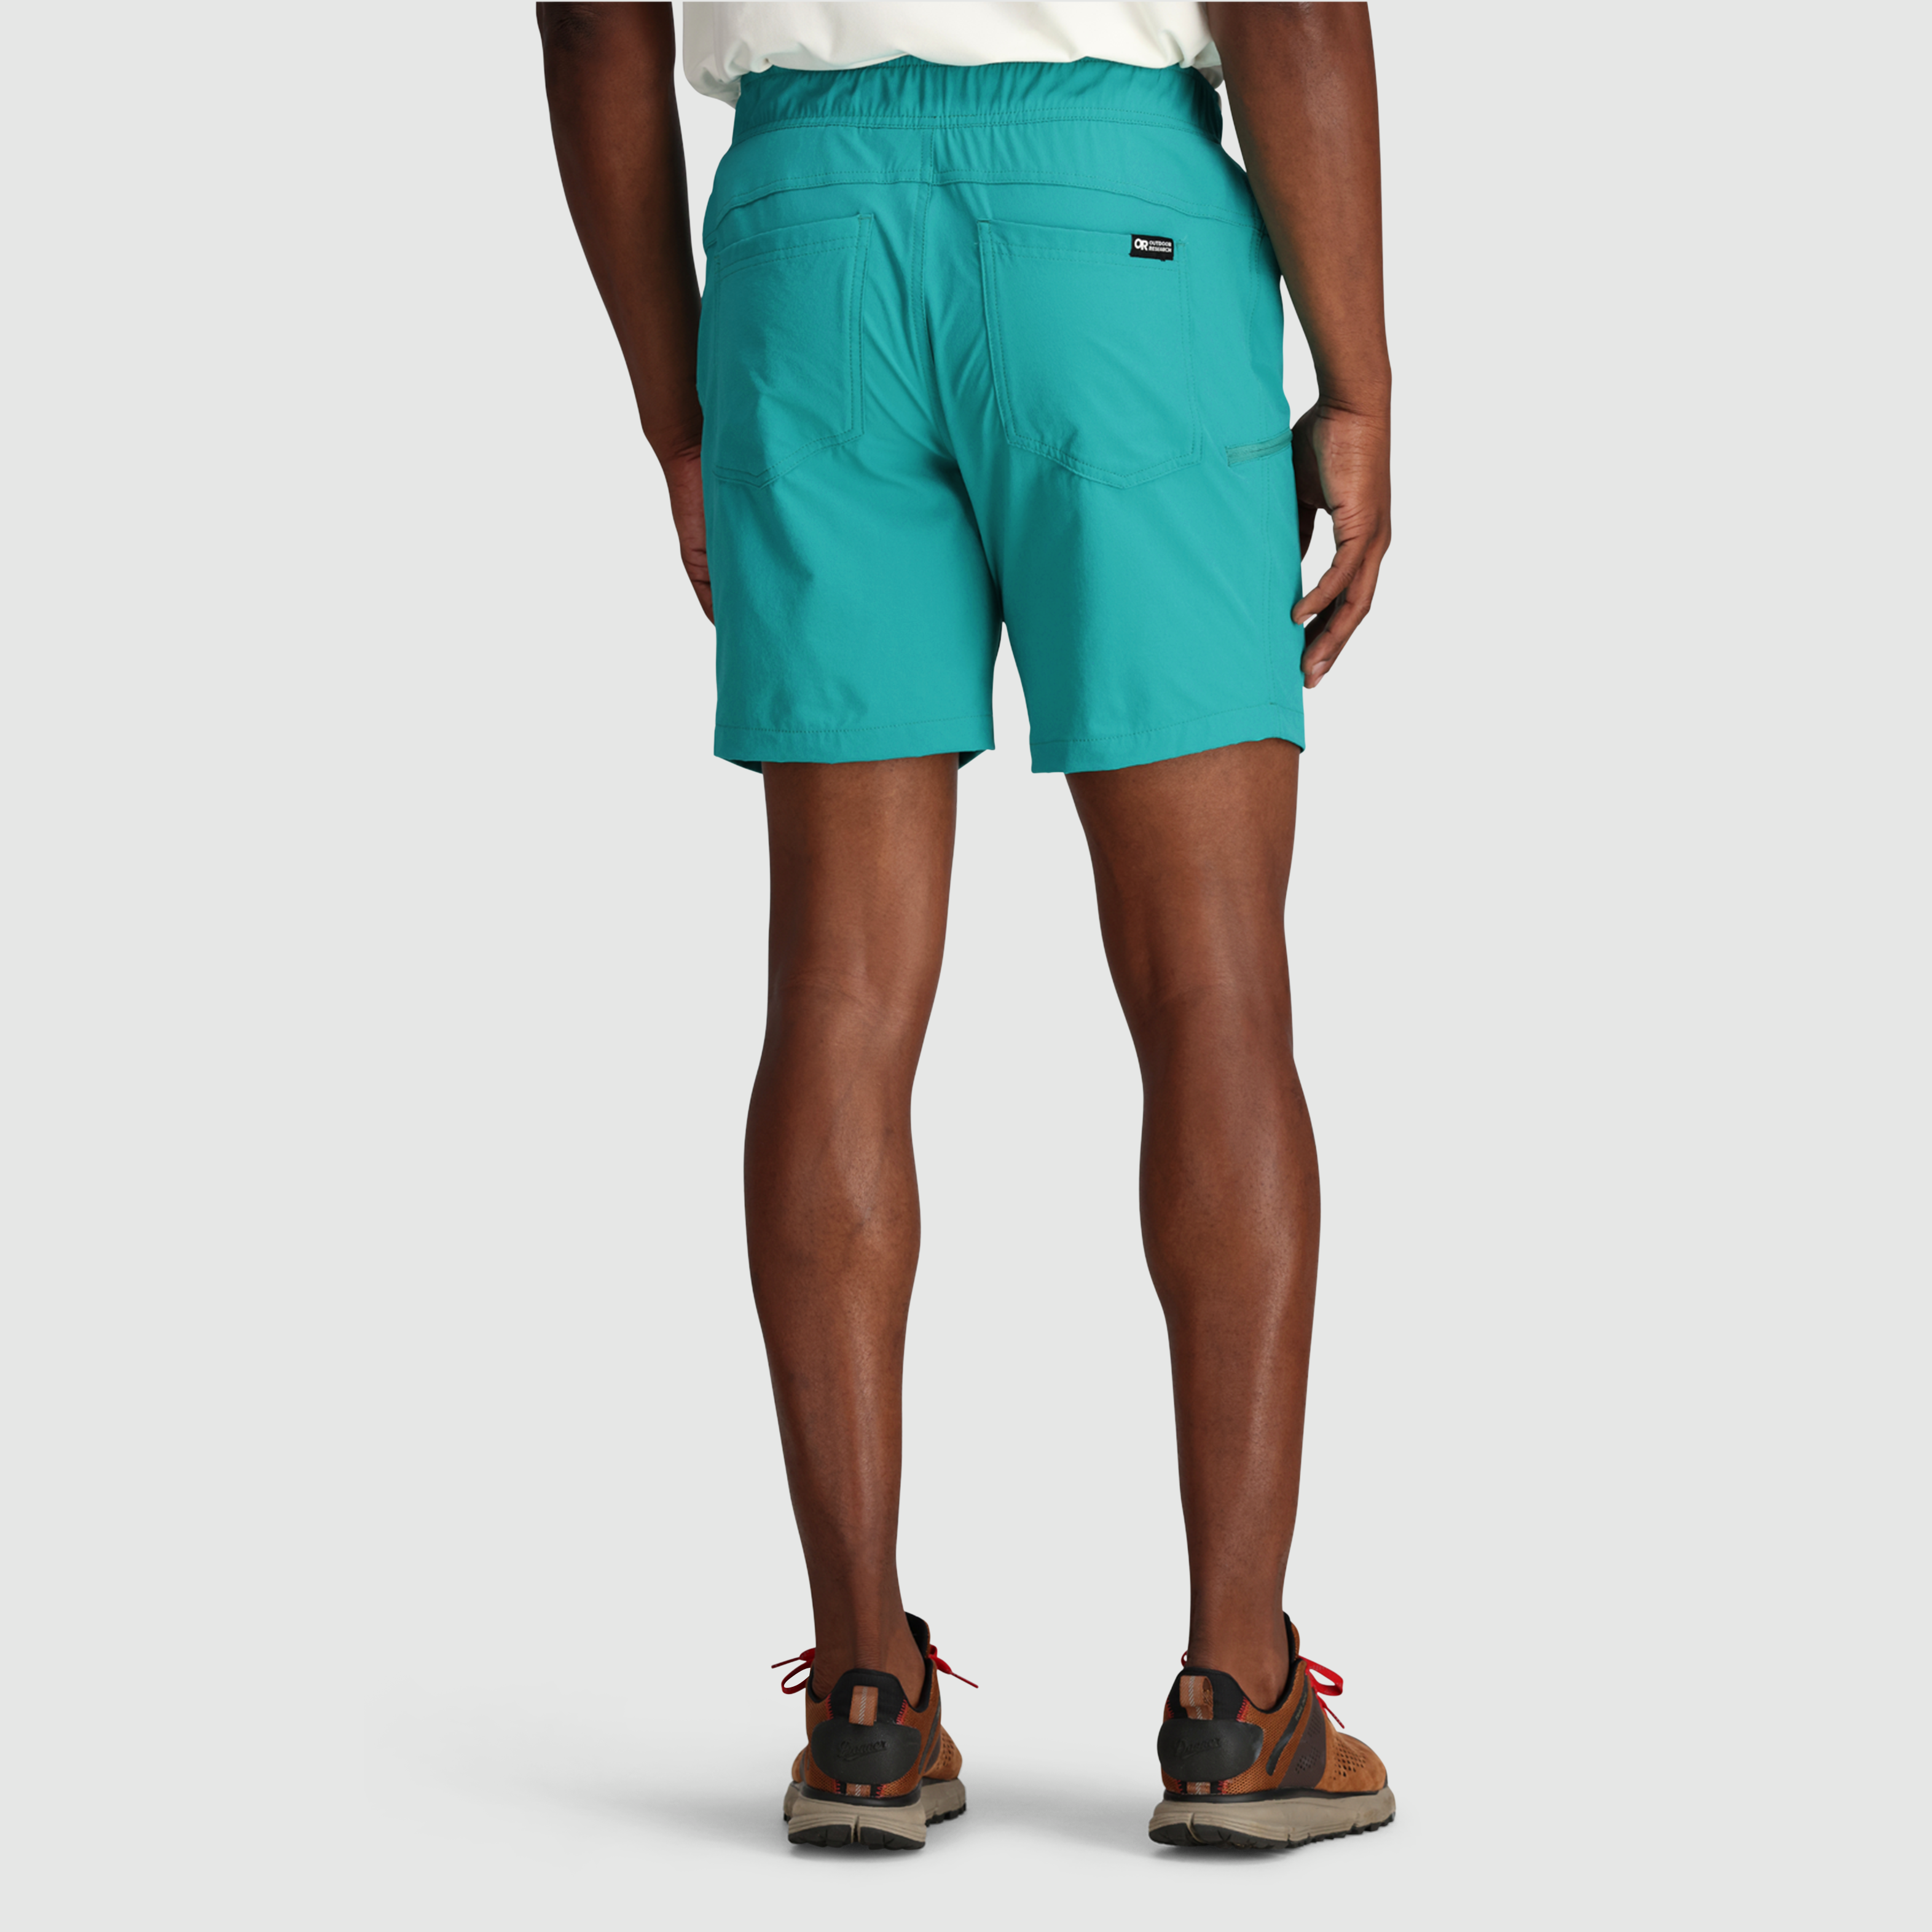 Men's Ferrosi Shorts - 7 Inseam